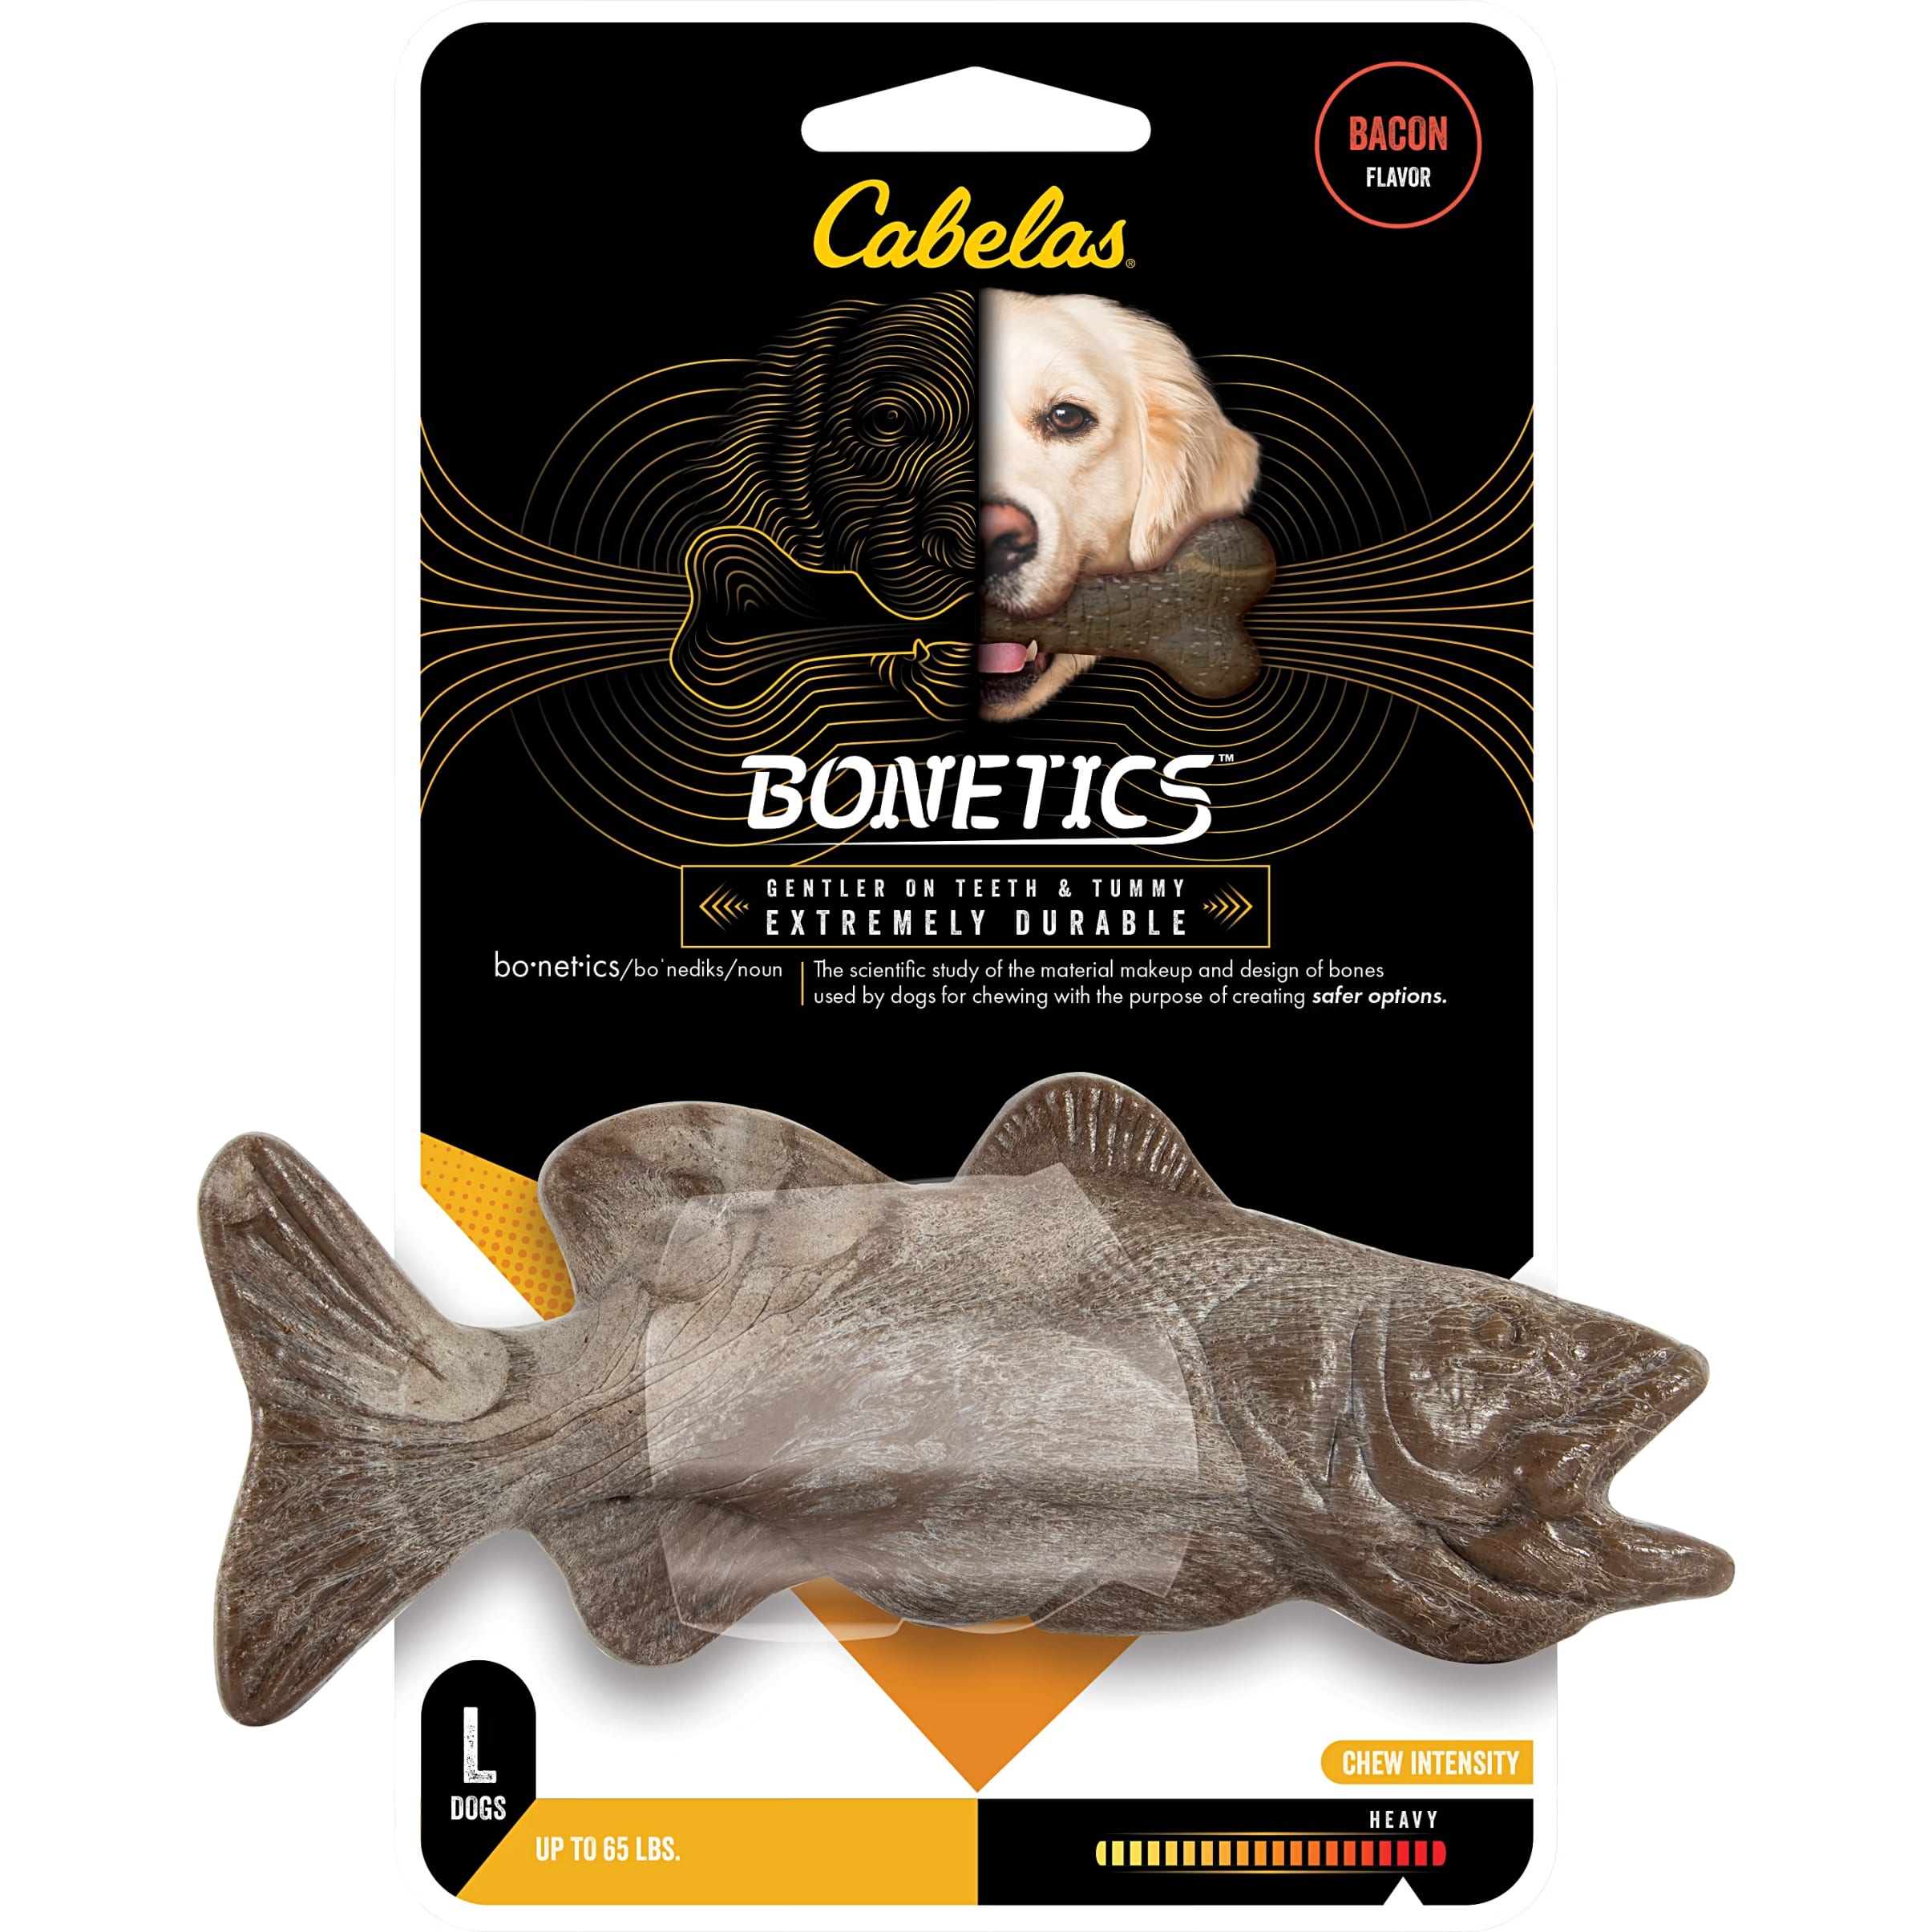 Cabela’s Bonetics® Large Bacon-Flavored Grouper Chew Toy